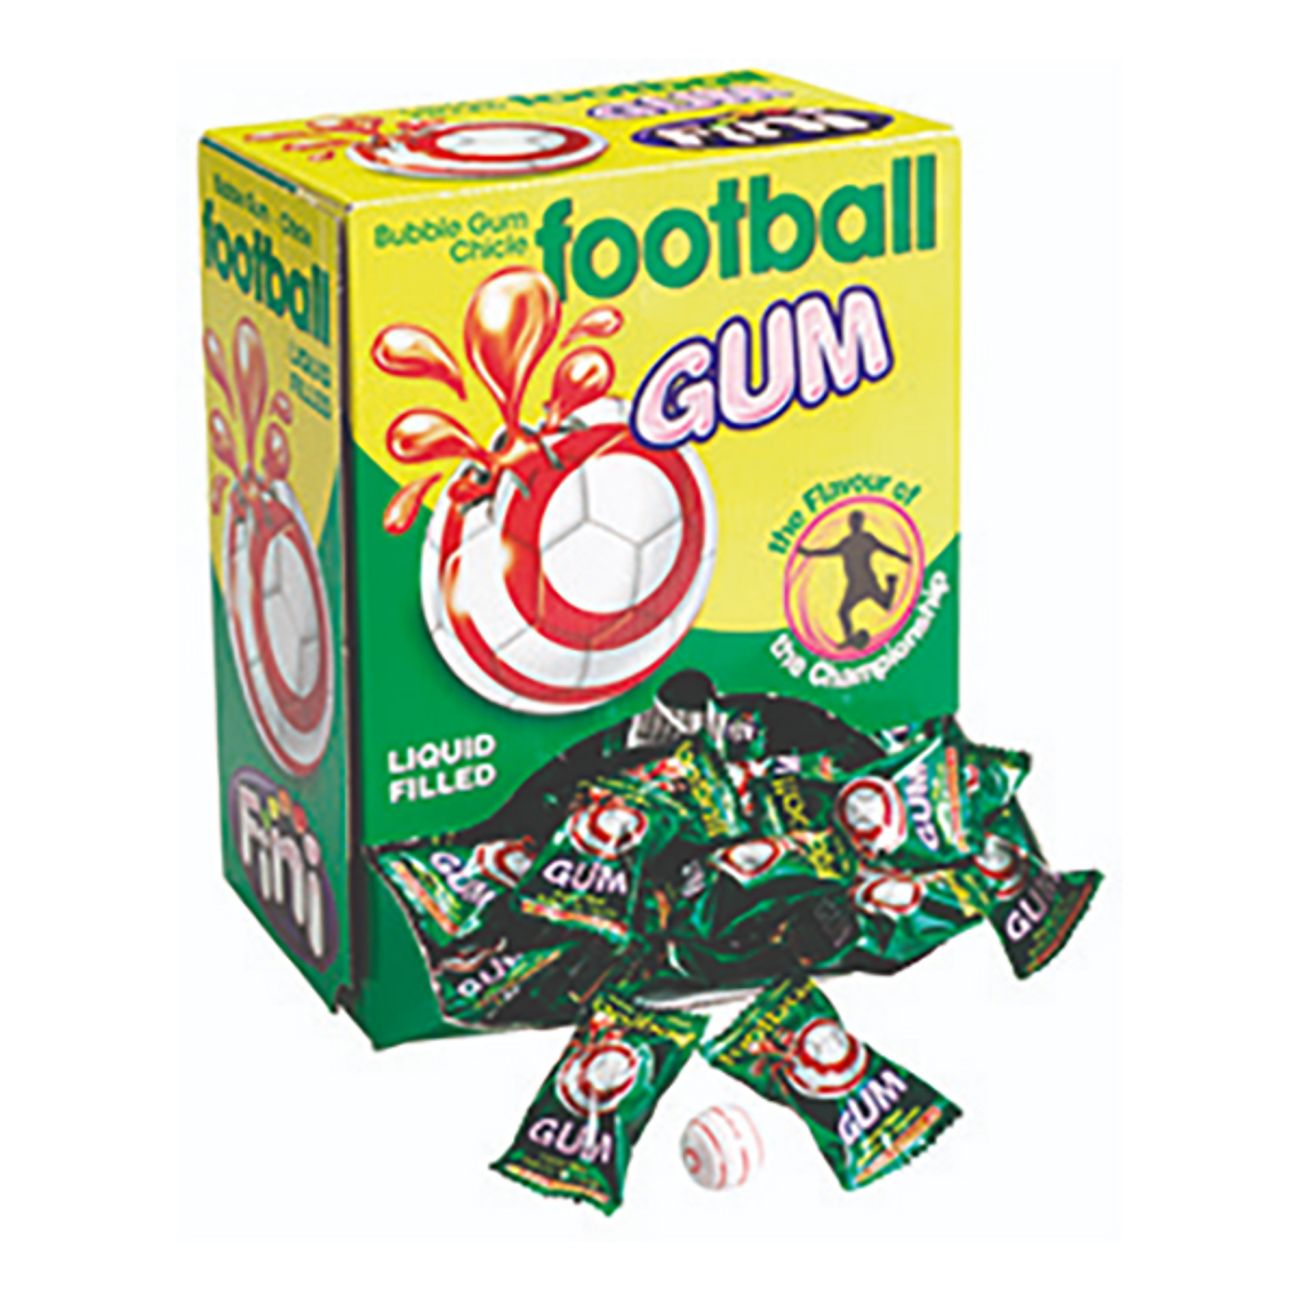 tuggummi-fotboll-storpack-75504-1